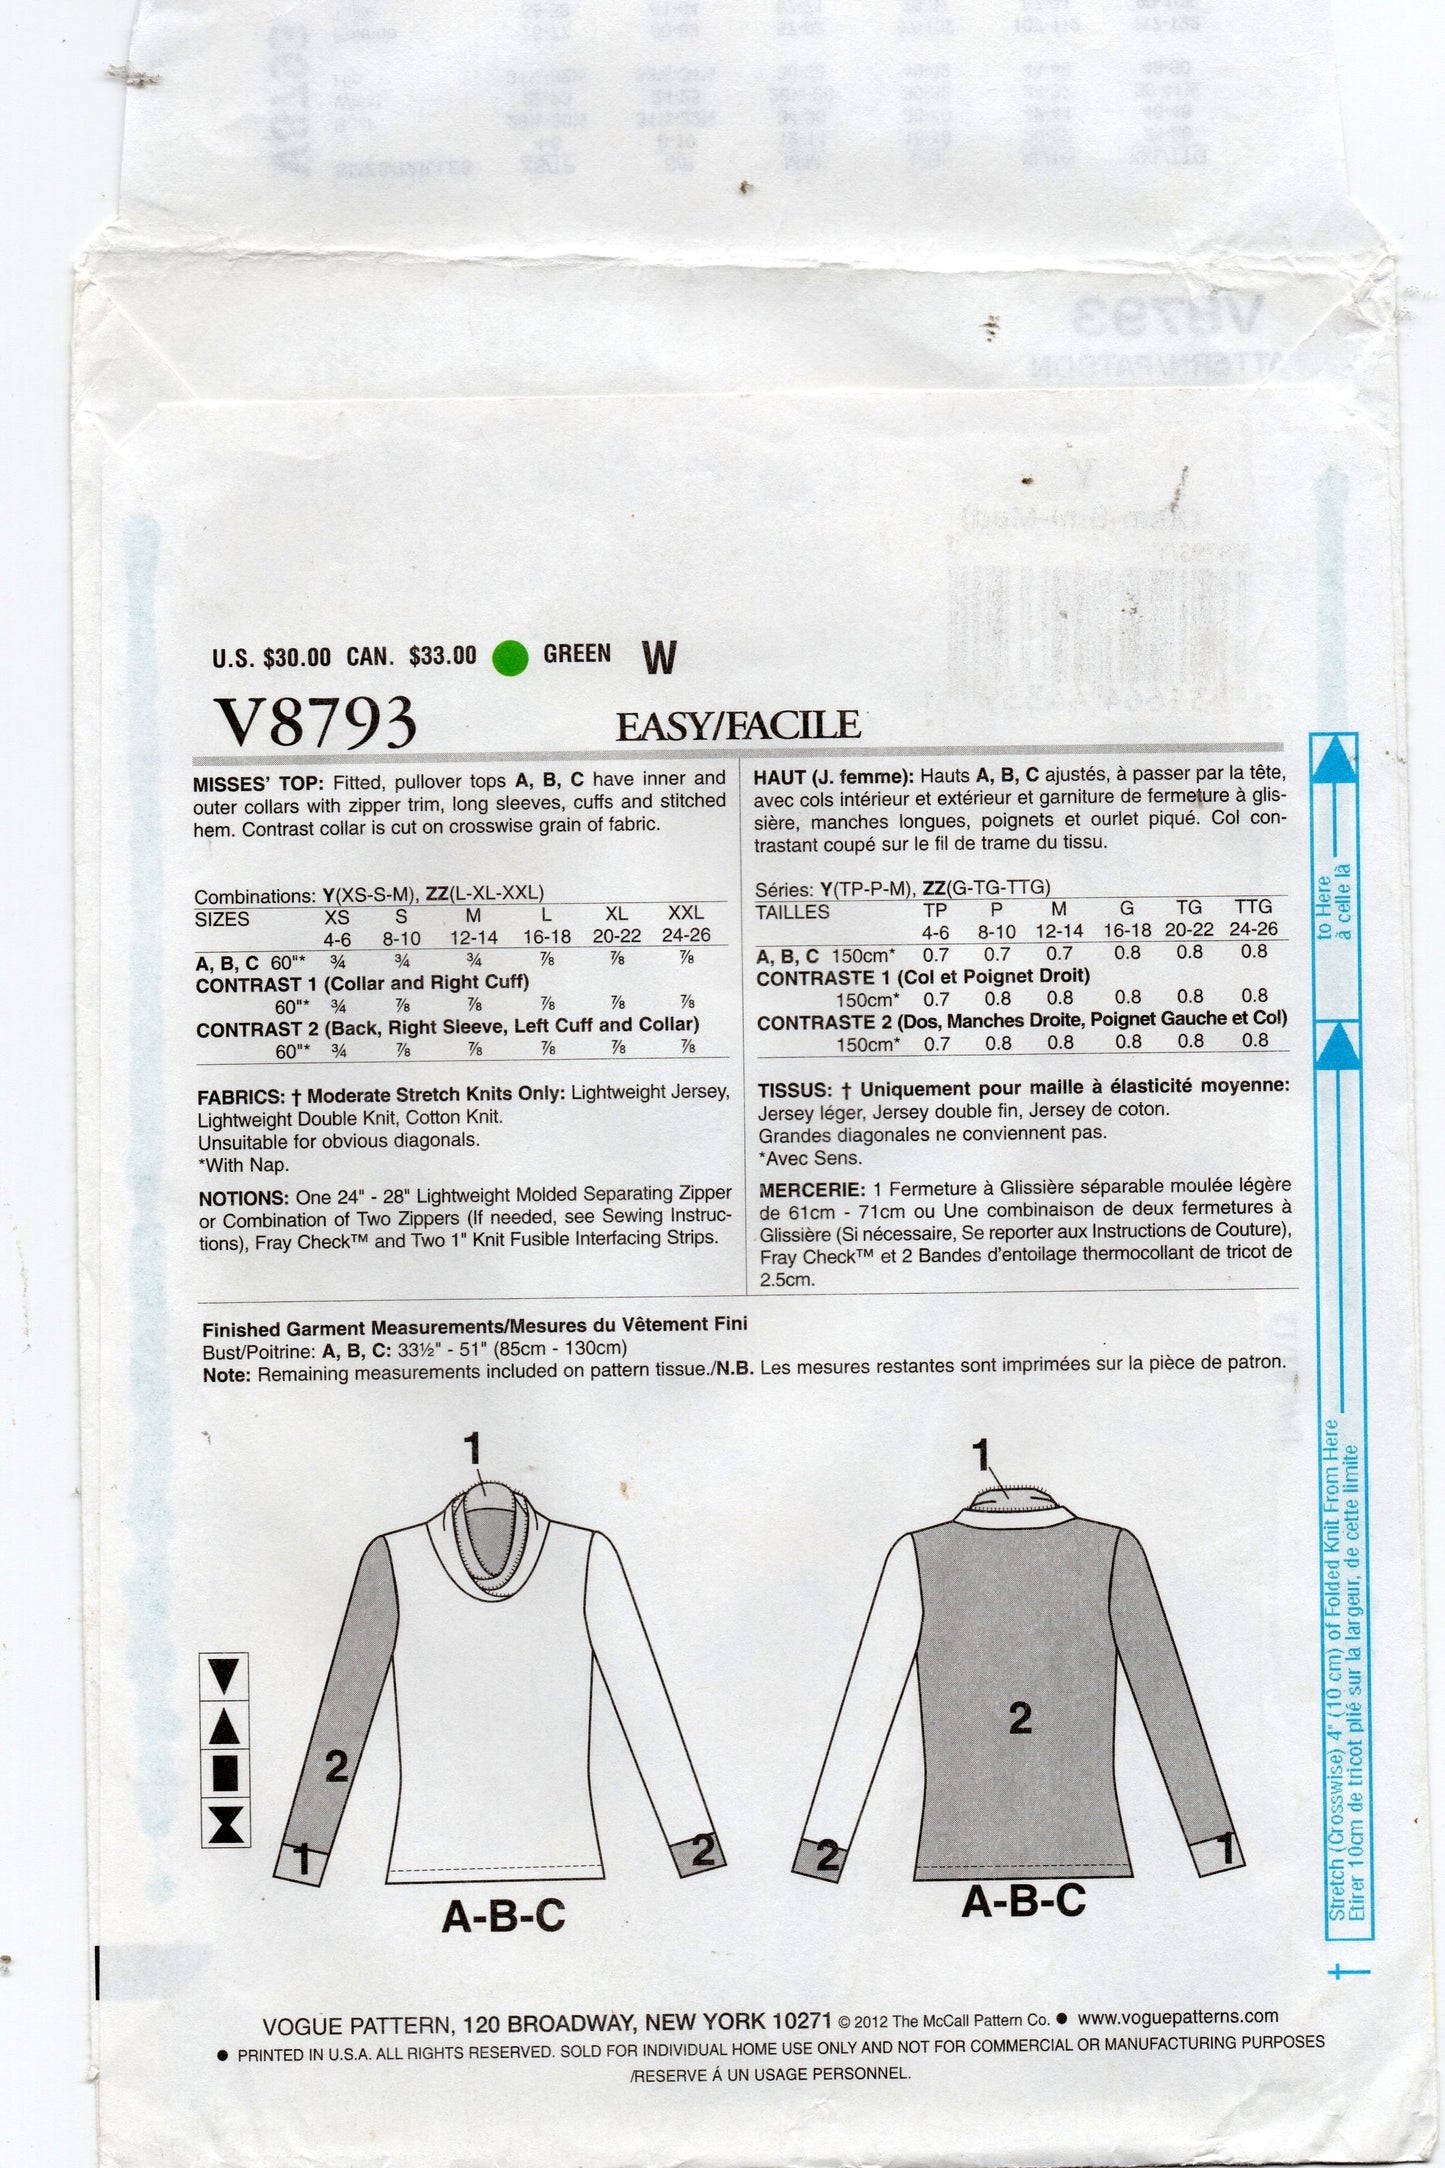 Vogue Designer Original V8793 KATHERINE TILTON Womens Colour Blocked Stretch Tops Out Of Print Sewing Pattern Size XS - M UNCUT Factory Folded